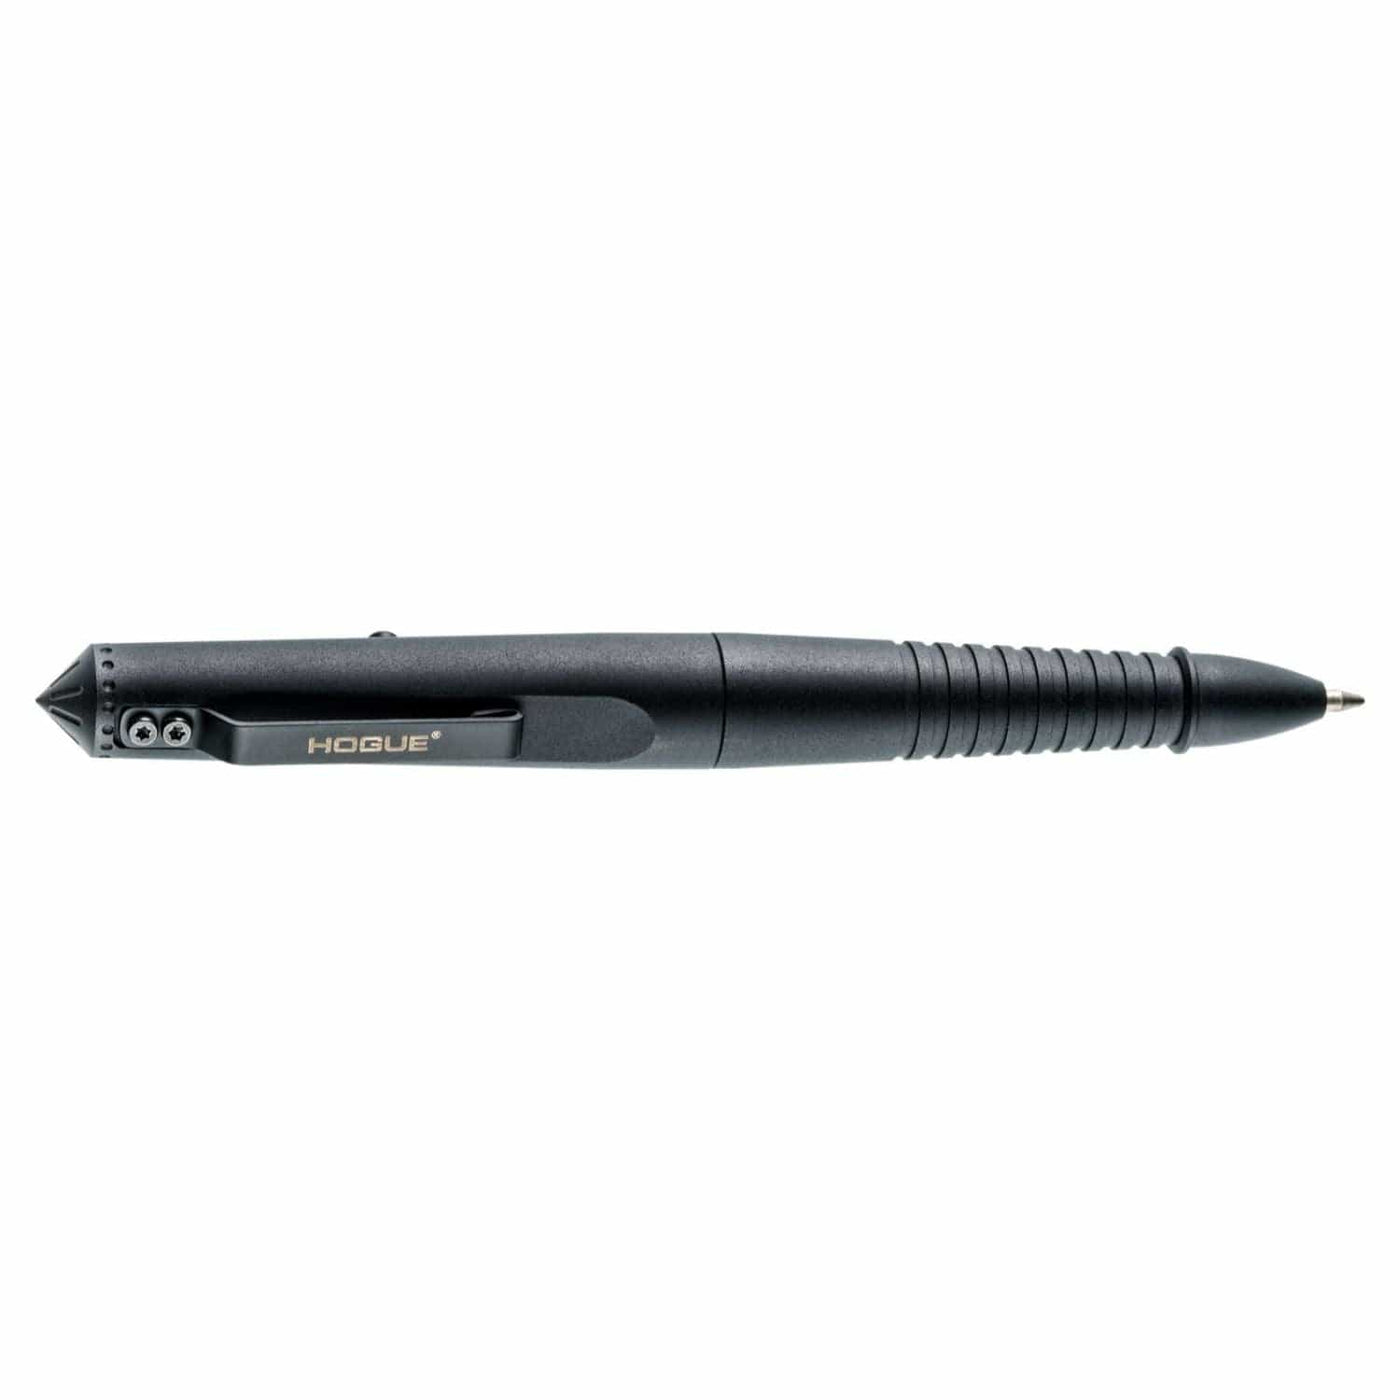 Hogue Hogue Tactical Pen Matte Black Aluminum Gifts And Novelty